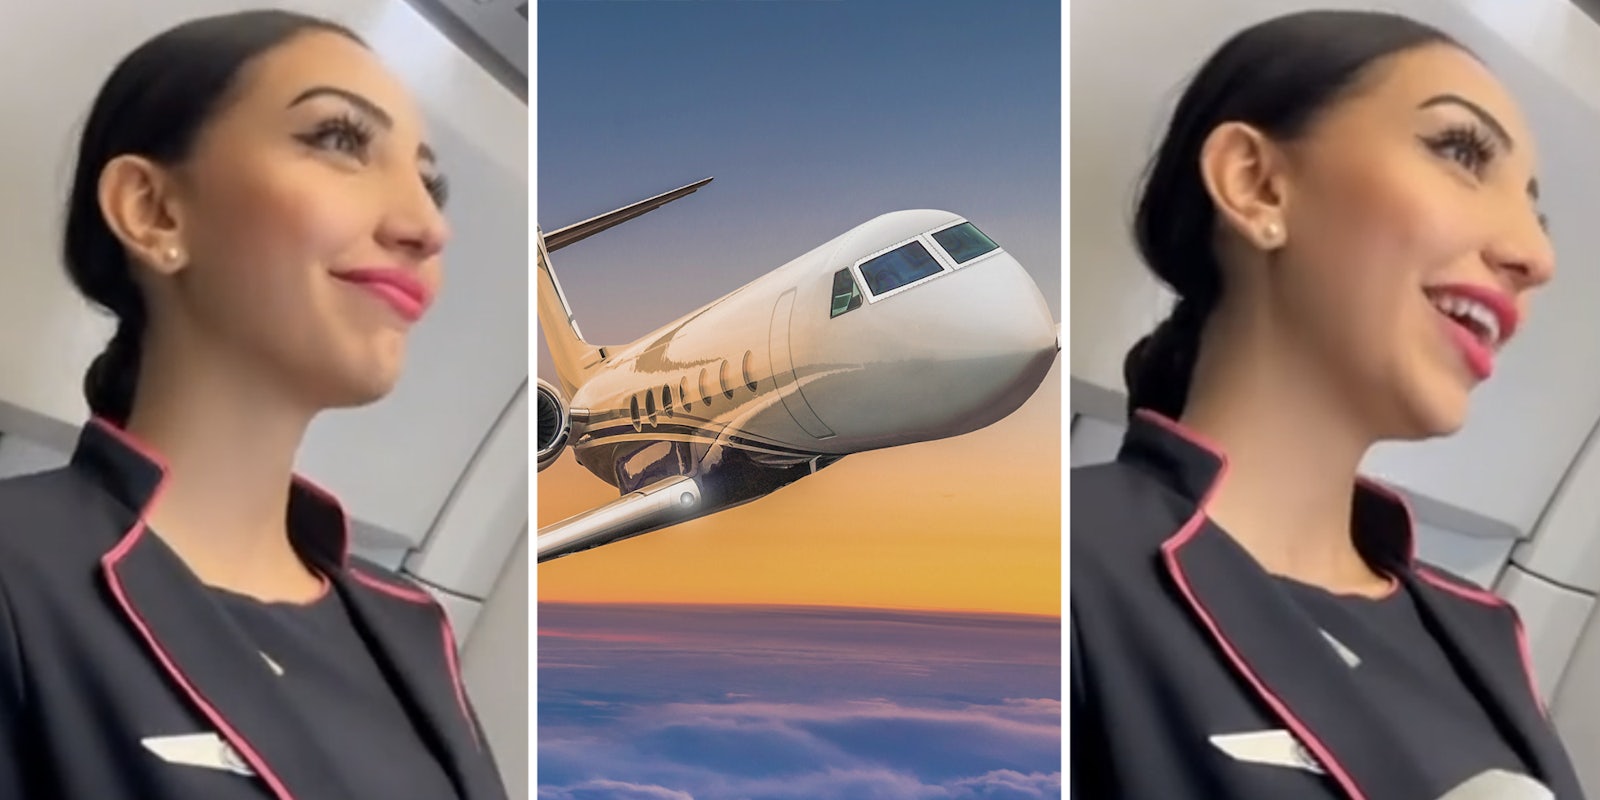 Flight attendant smiling(l+r), Airplane(c)